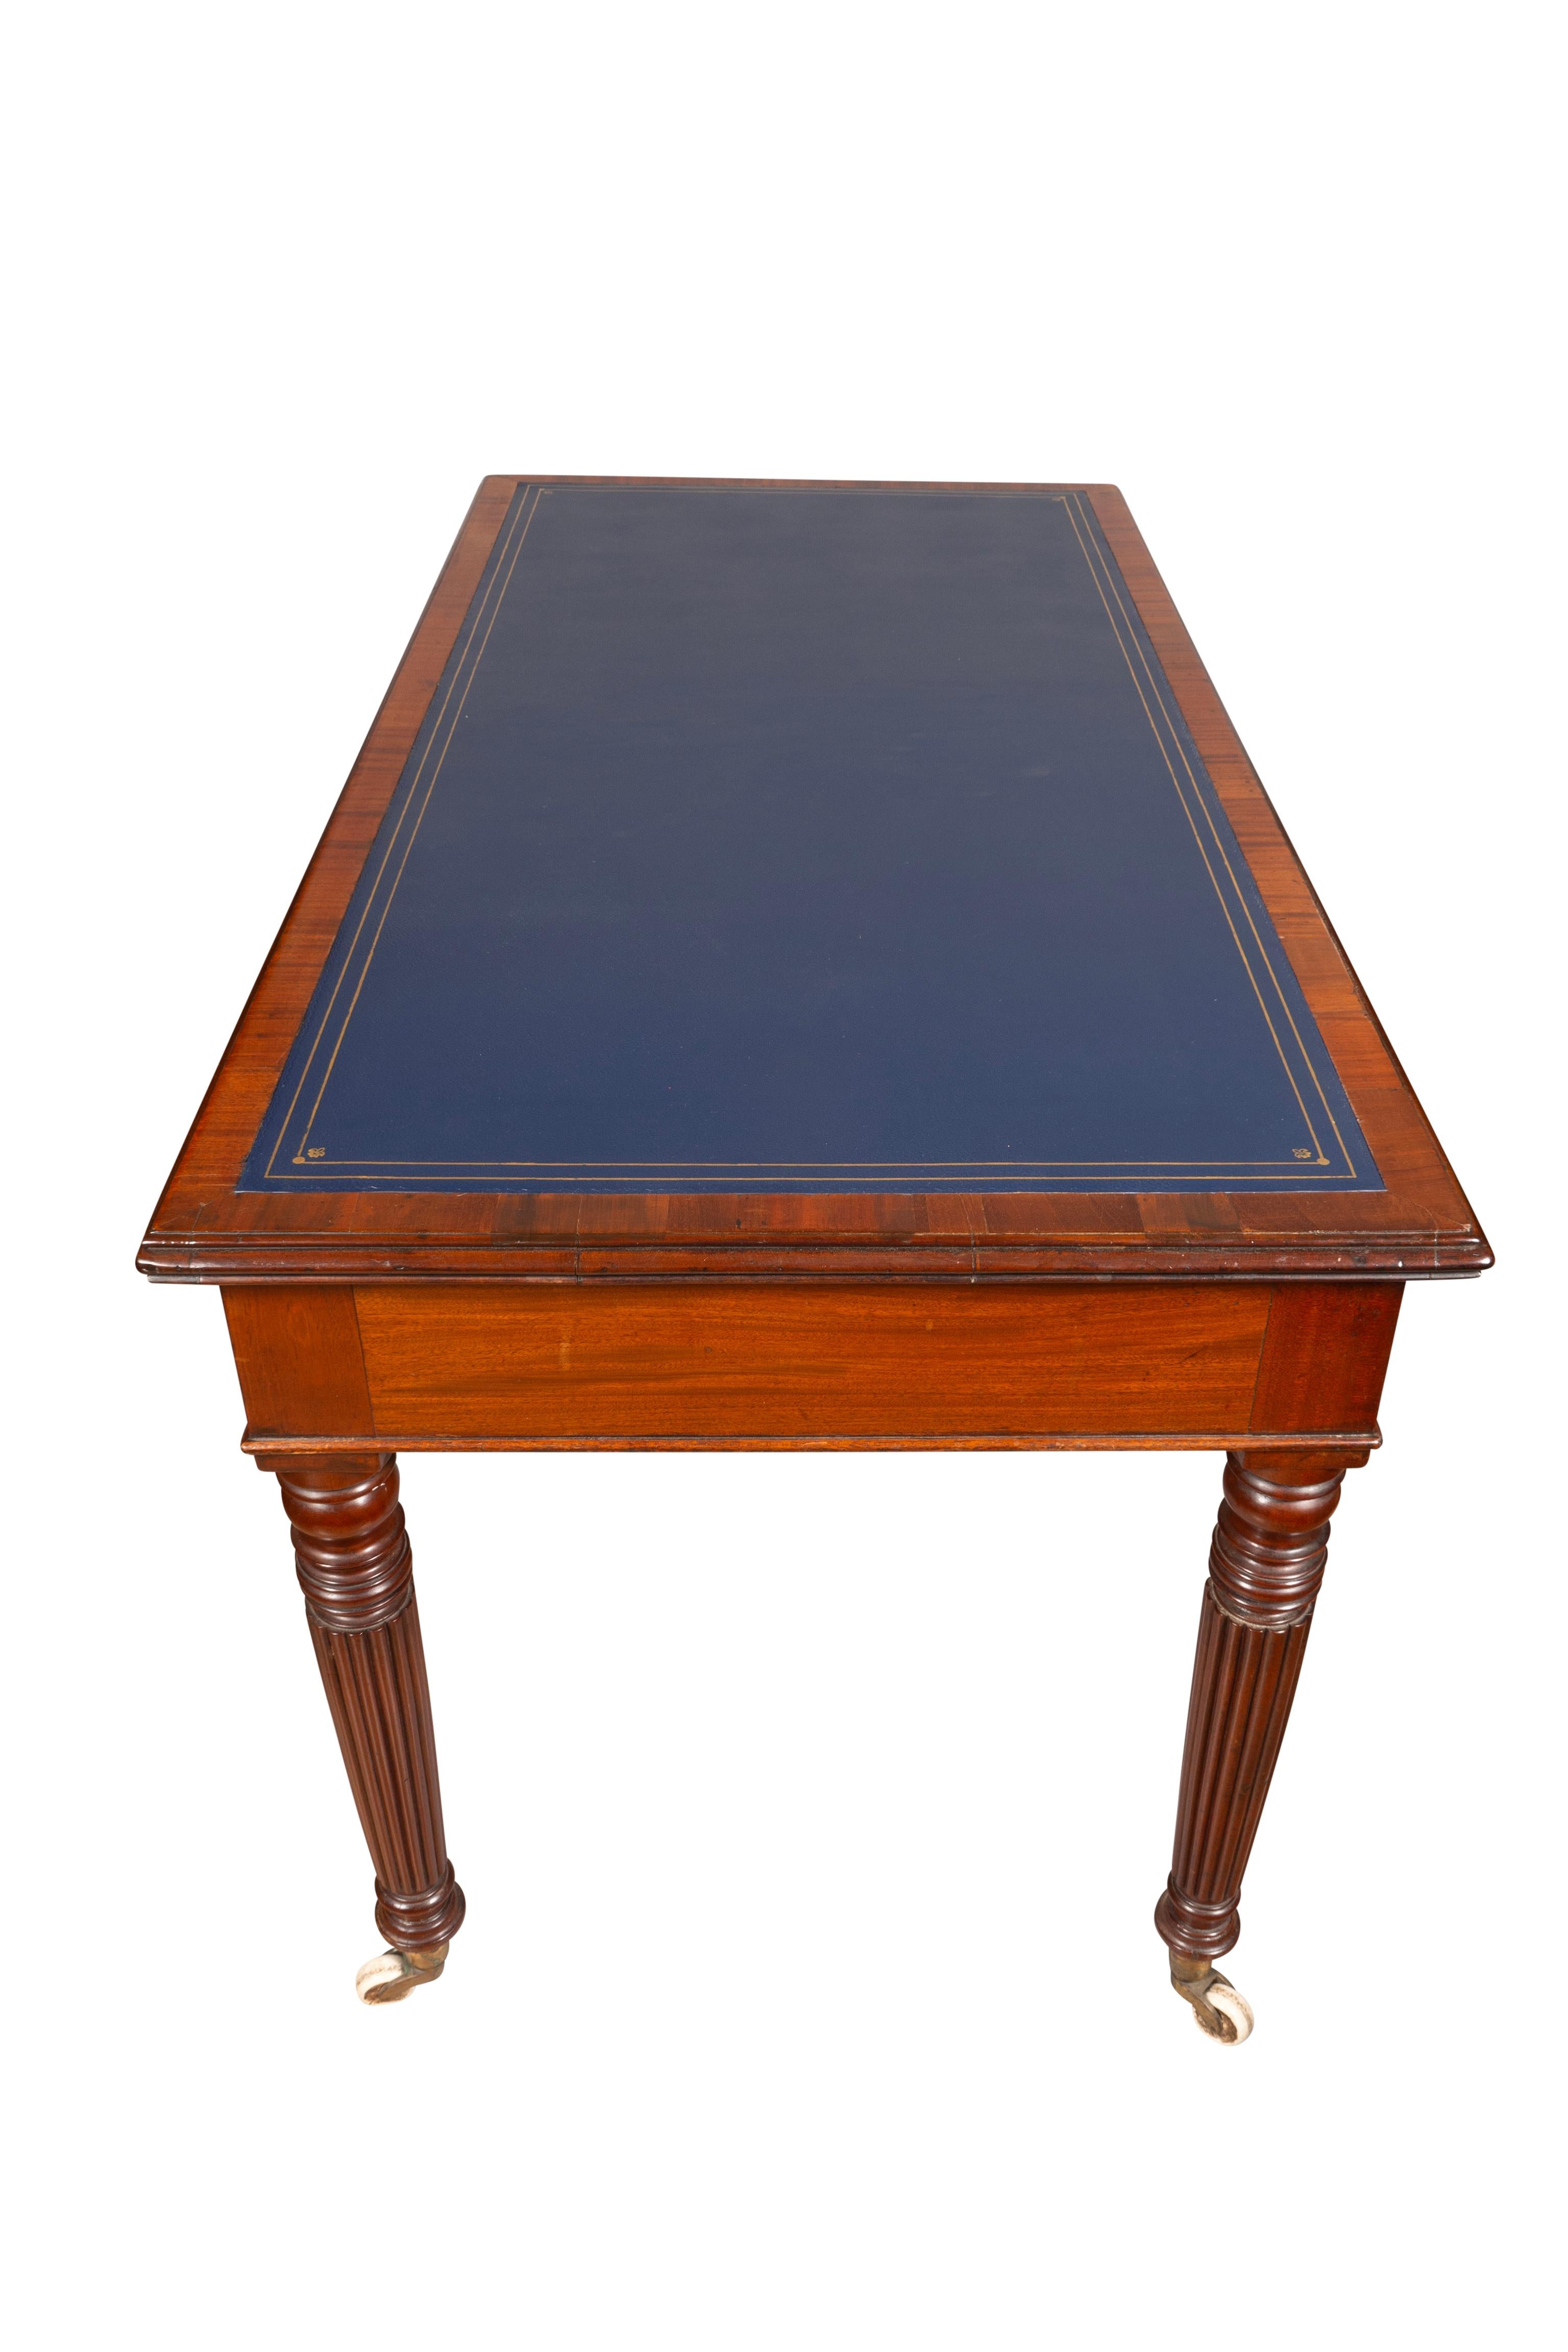 Early 19th Century Regency Mahogany Writing Table For Sale